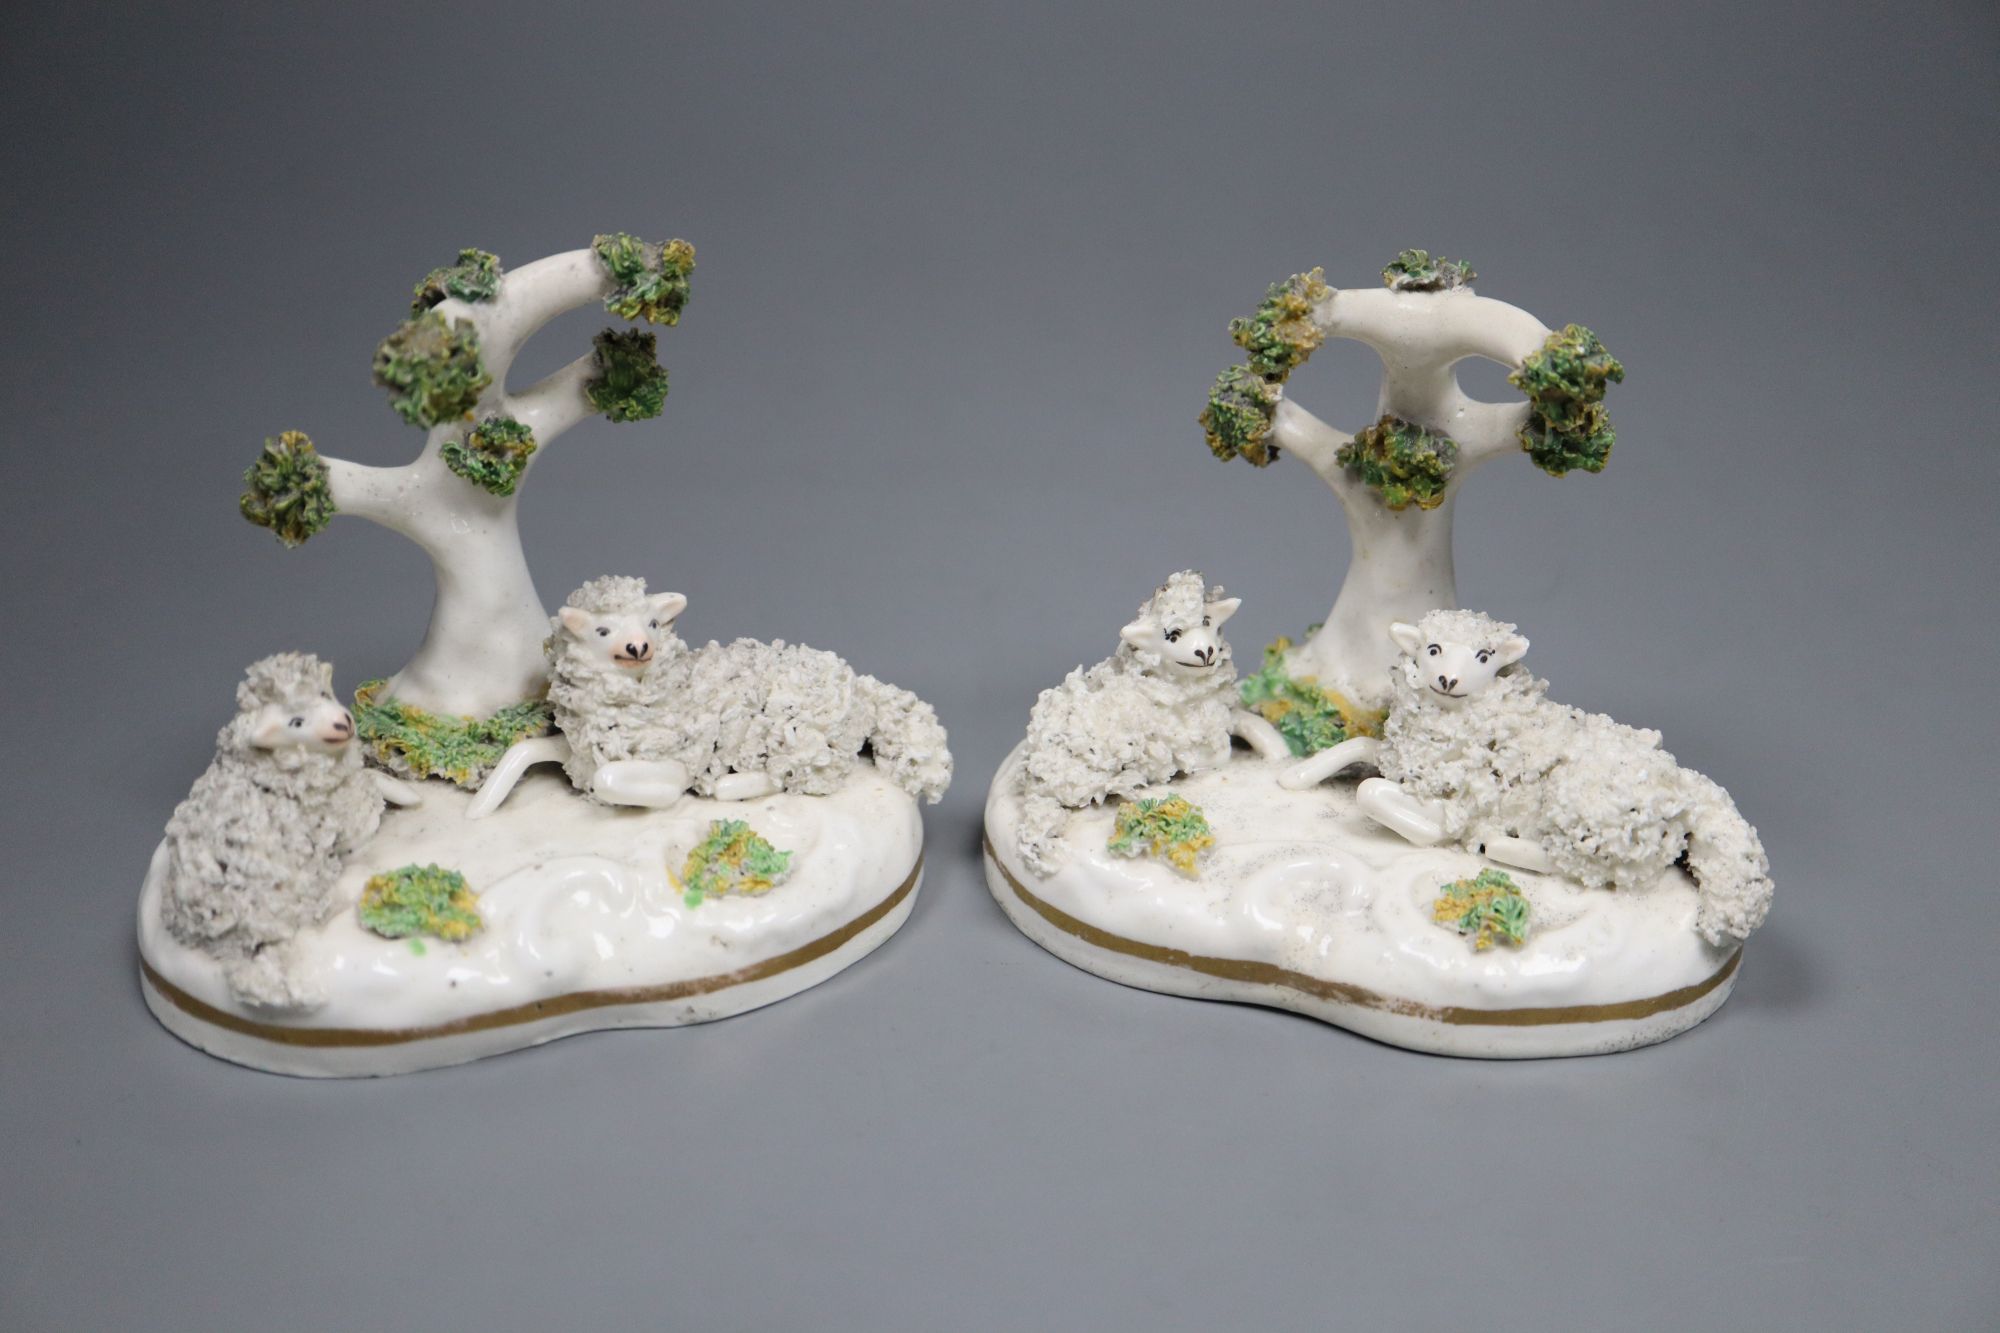 Two similar Staffordshire porcelain models of sheep recumbent beneath a tree, c.1835-50, possibly Lloyd Shelton, 9cm high